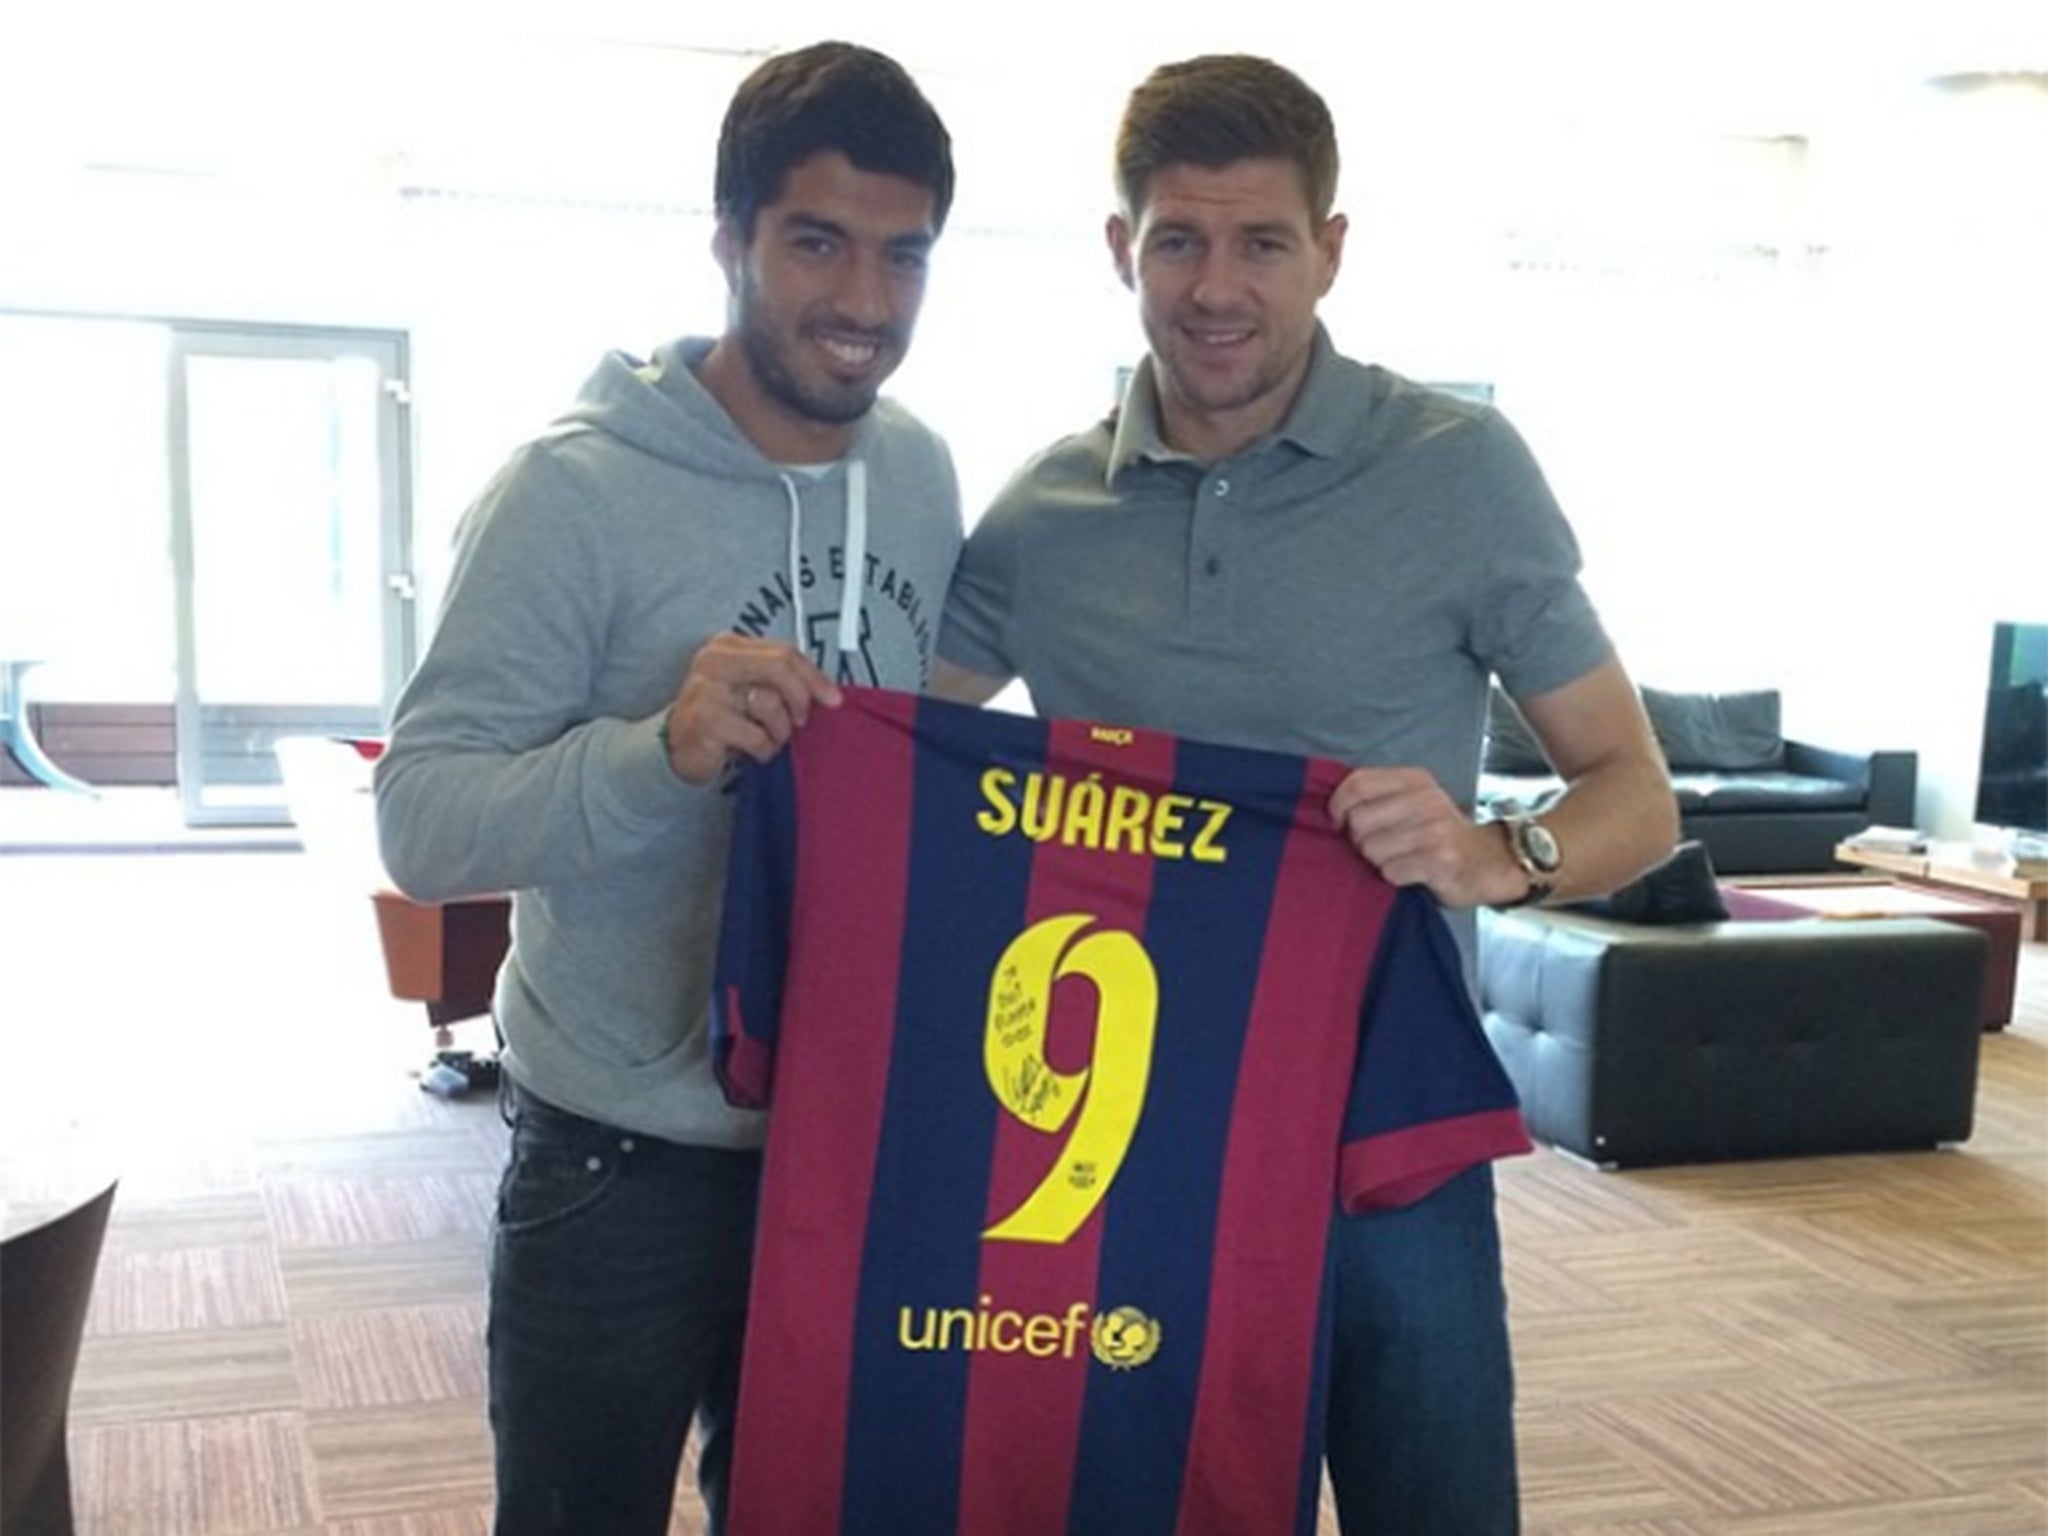 Luis Suarez together with Steven Gerrard